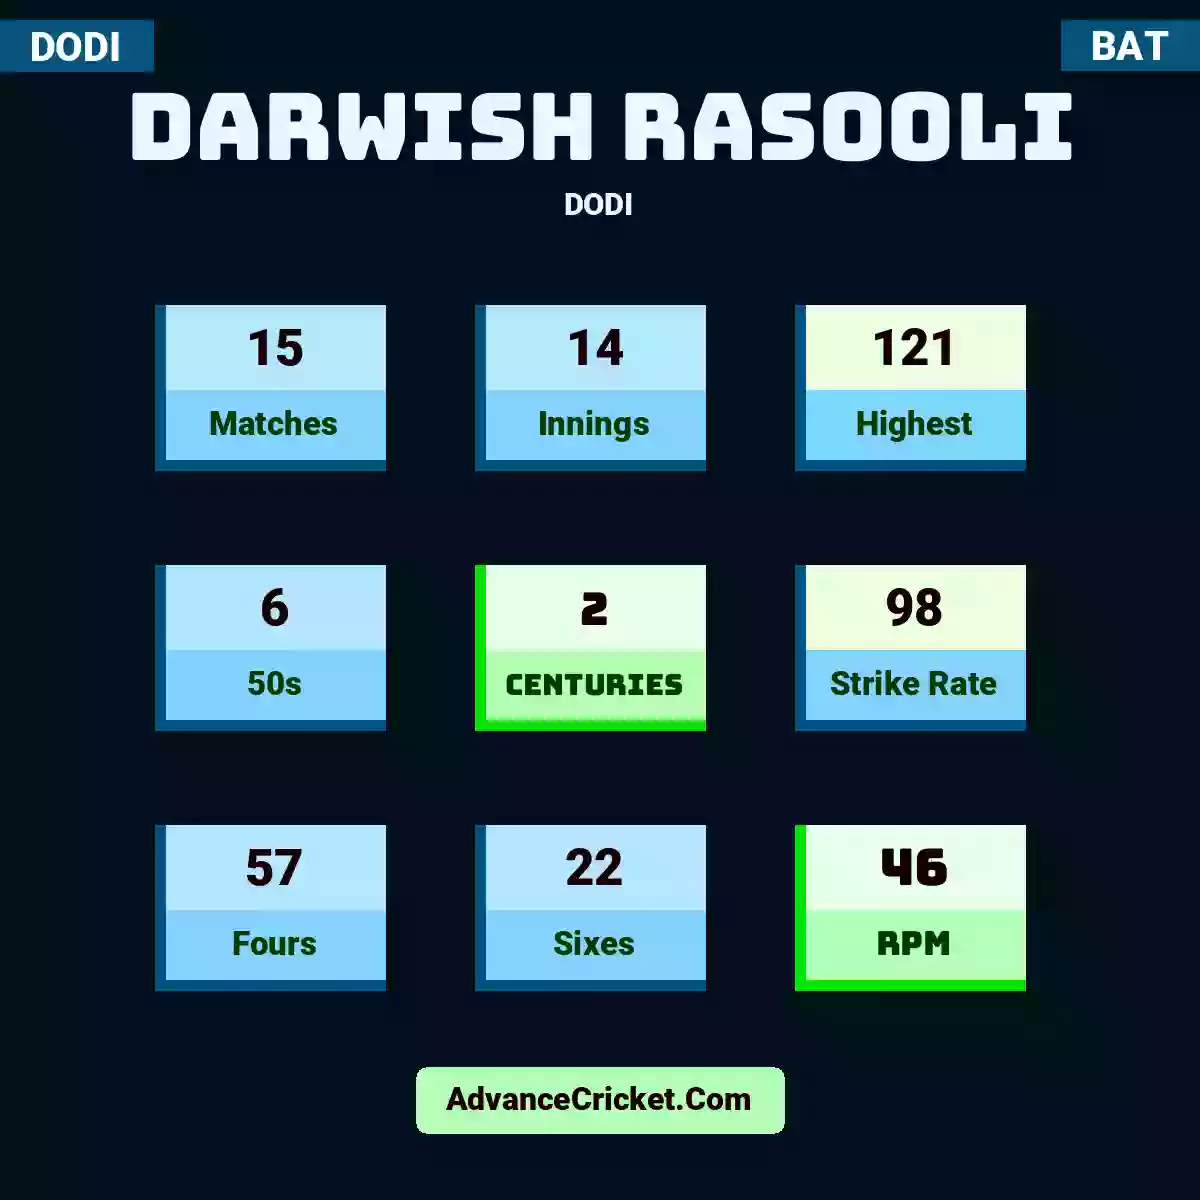 Darwish Rasooli DODI , Darwish Rasooli played 15 matches, scored 121 runs as highest, 6 half-centuries, and 2 centuries, with a strike rate of 98. D.Rasooli hit 57 fours and 22 sixes, with an RPM of 46.